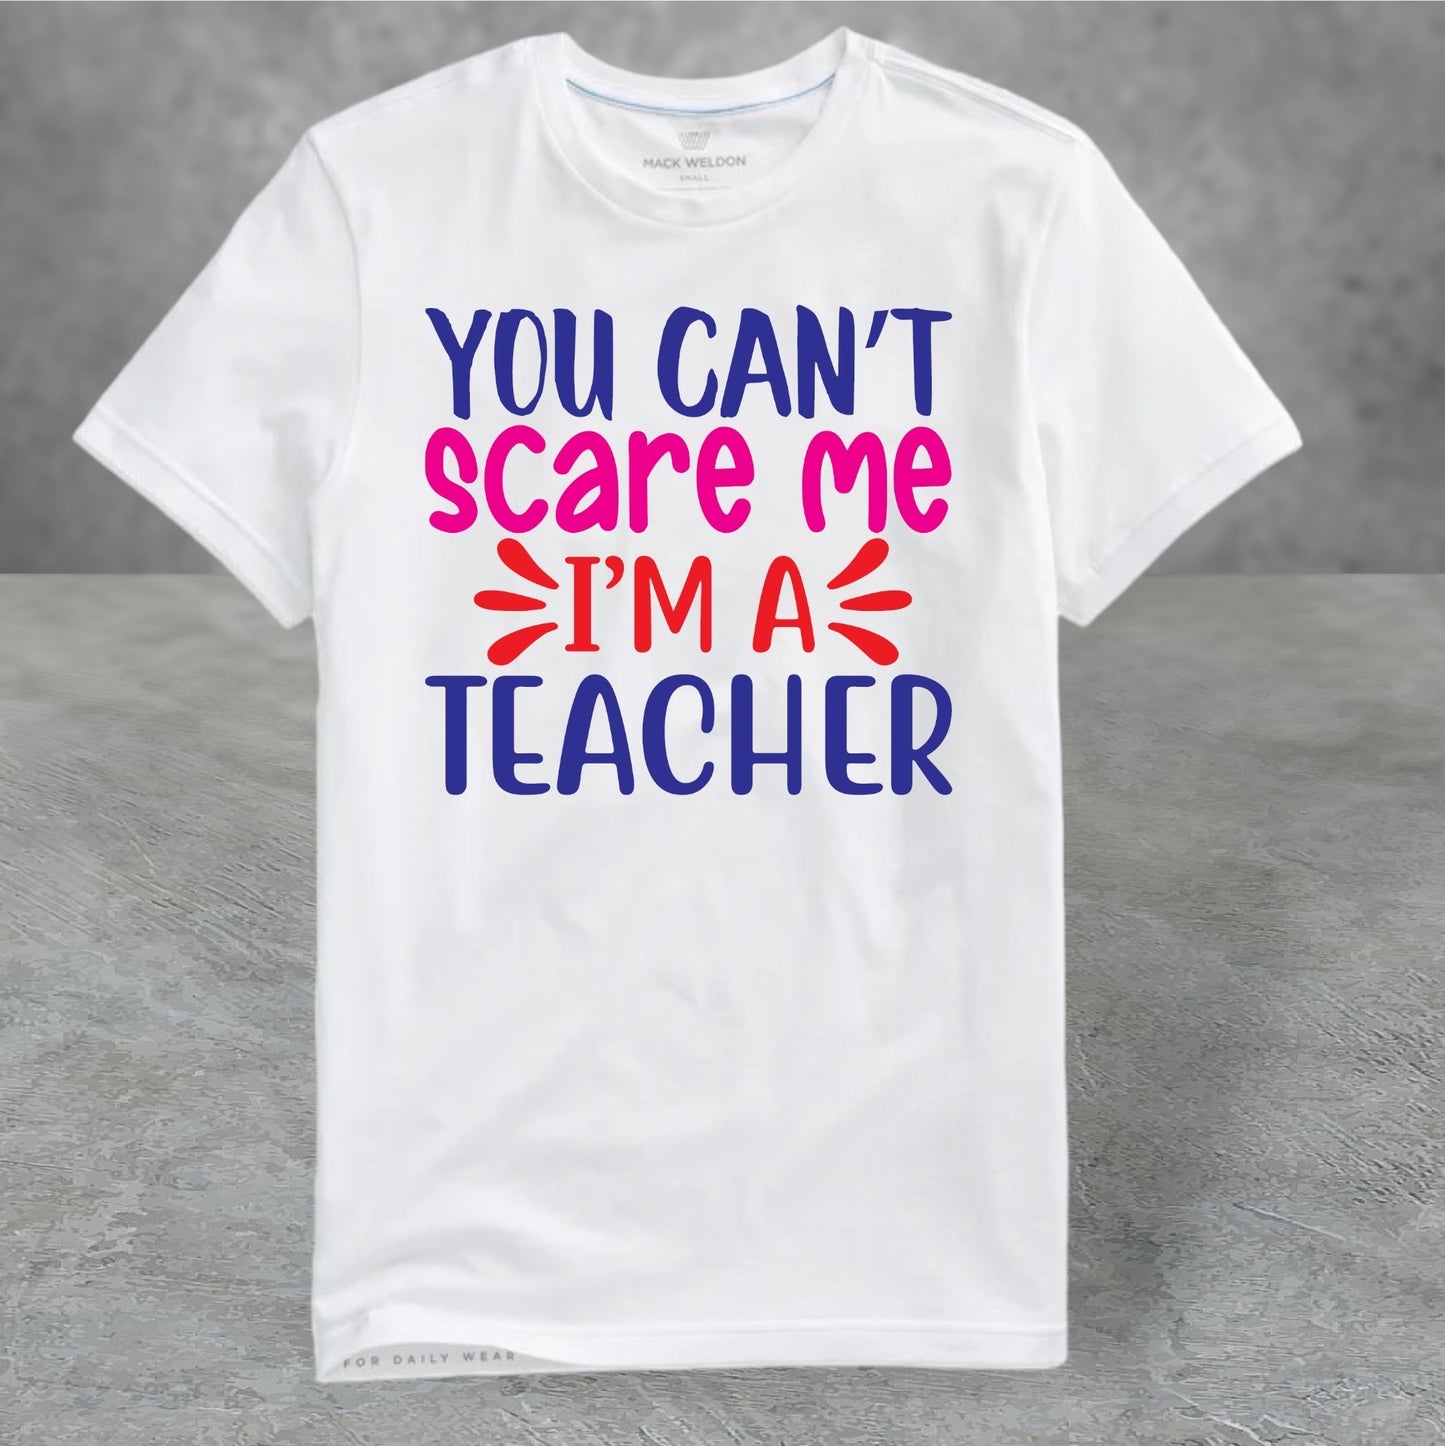 Can’t Scare A Teacher